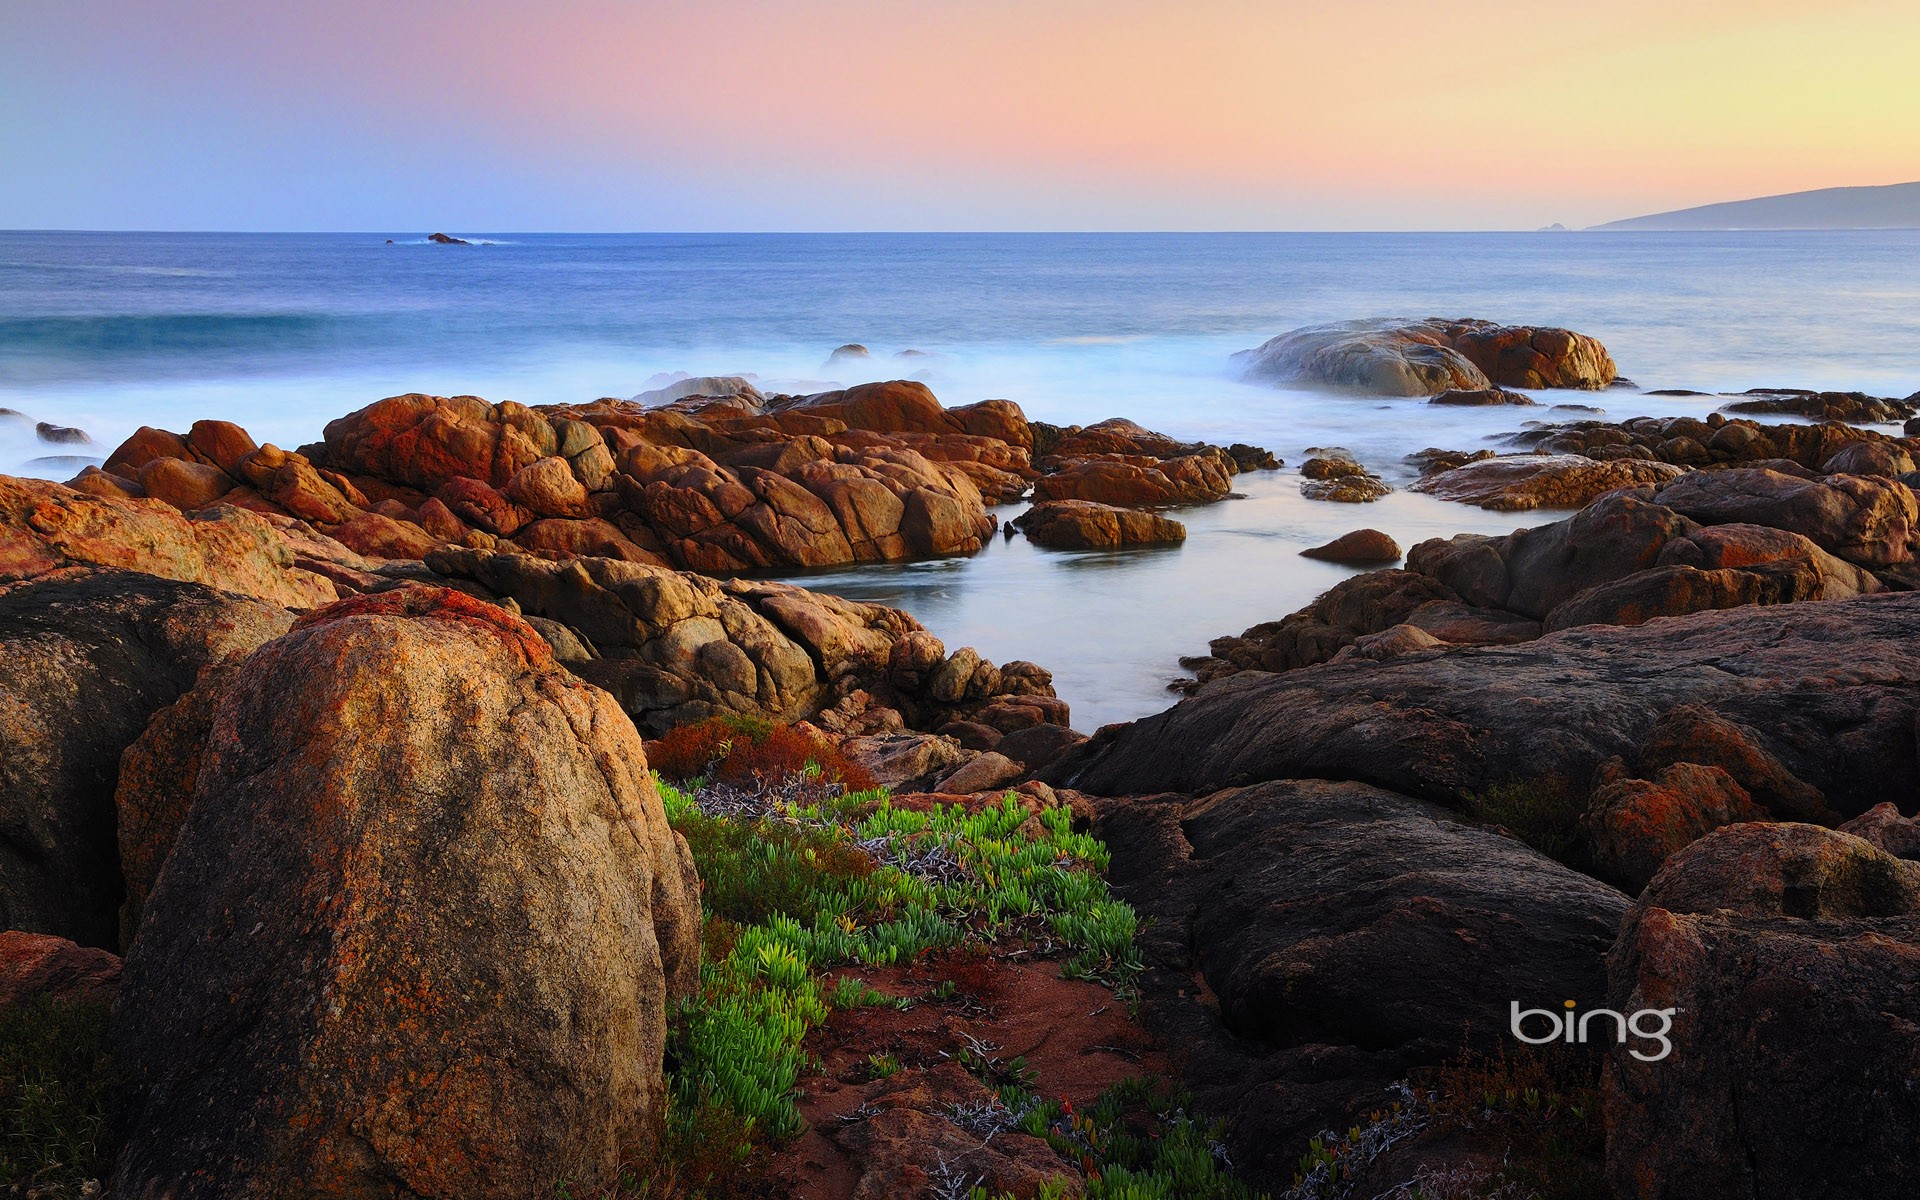 Www bing com image. Красивый вид на море. Море скалы. Пейзажи Австралии. Красивые пейзажи Австралии.